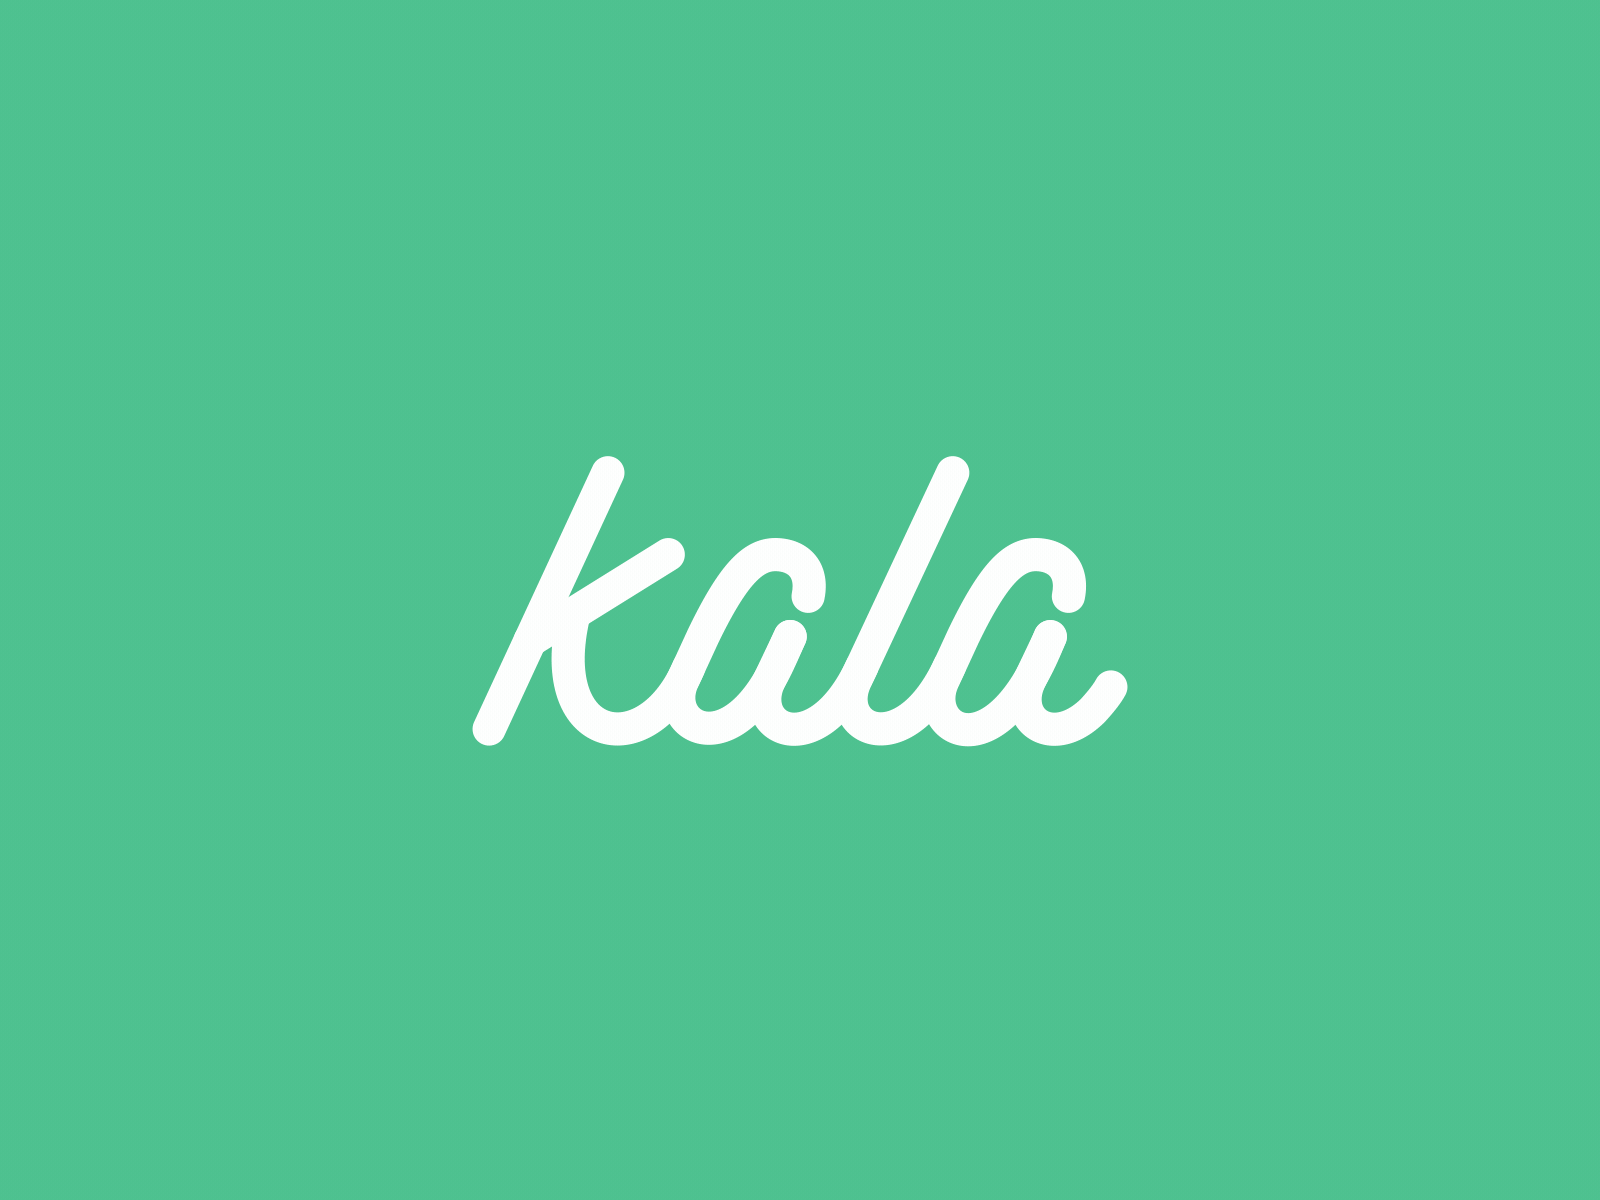 Kala logo animation by Adam Eastburn on Dribbble